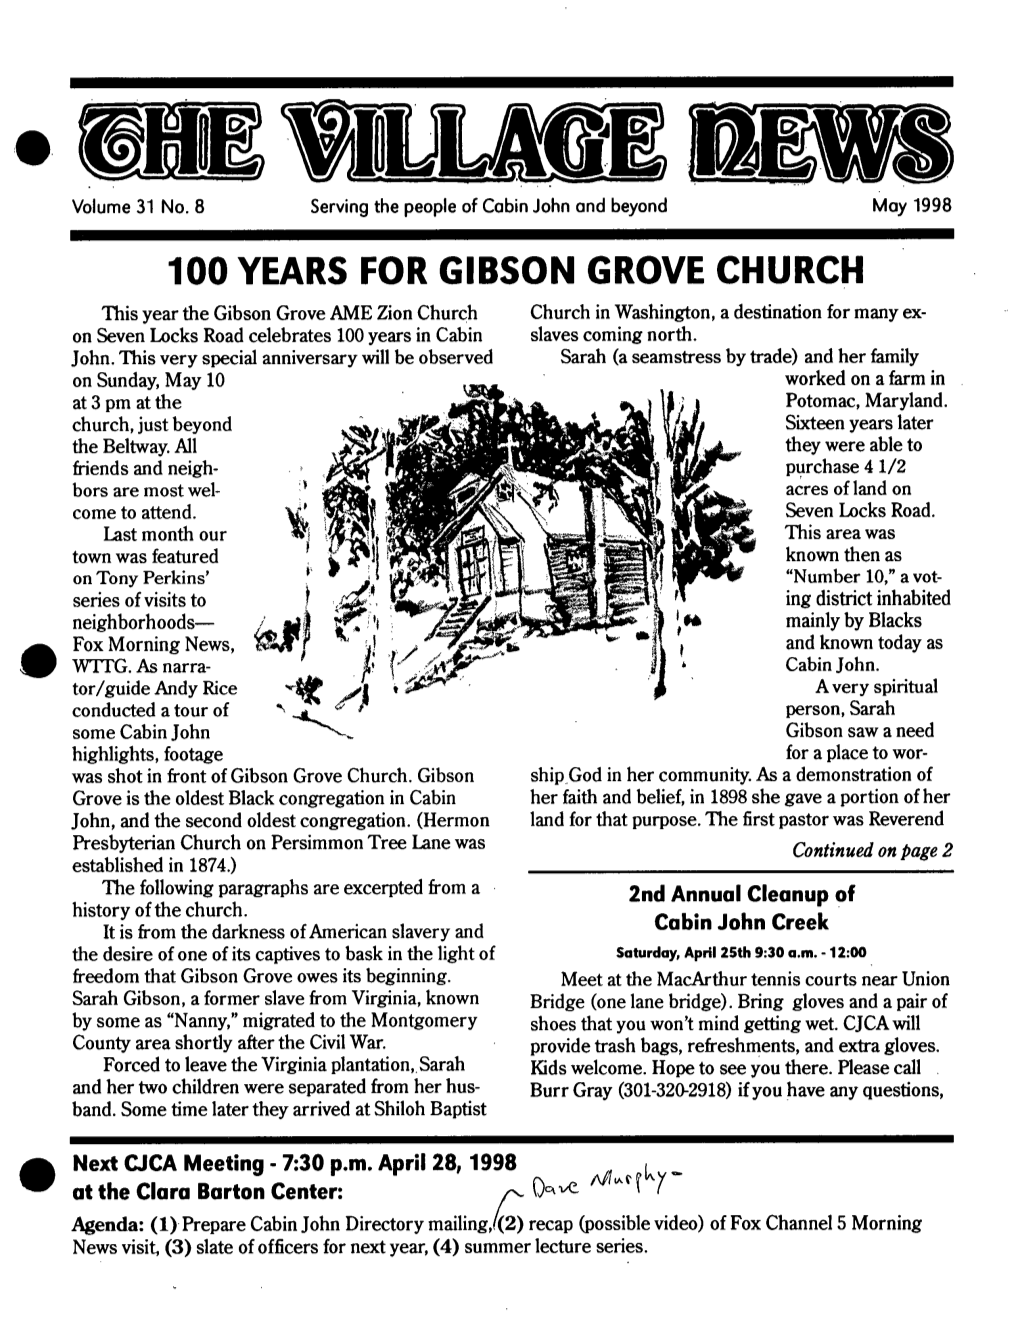 100 Years for Gibson Grove Church